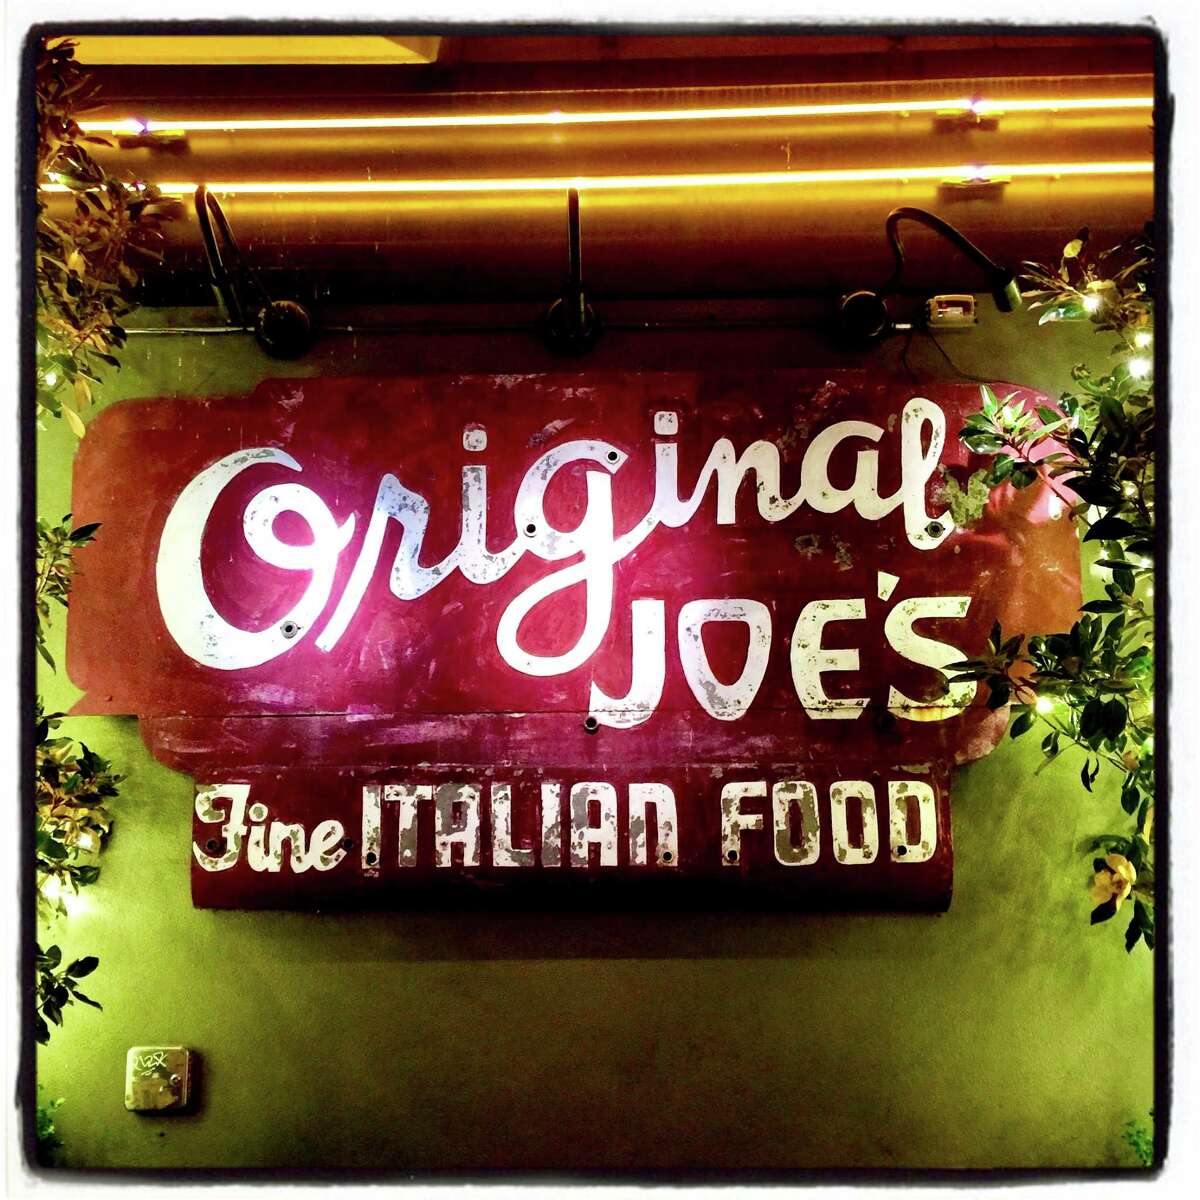 Original Joe's的泰勒街招牌在2007年的大火中幸存下来，并被搬到了北海滩的Original Joe's。